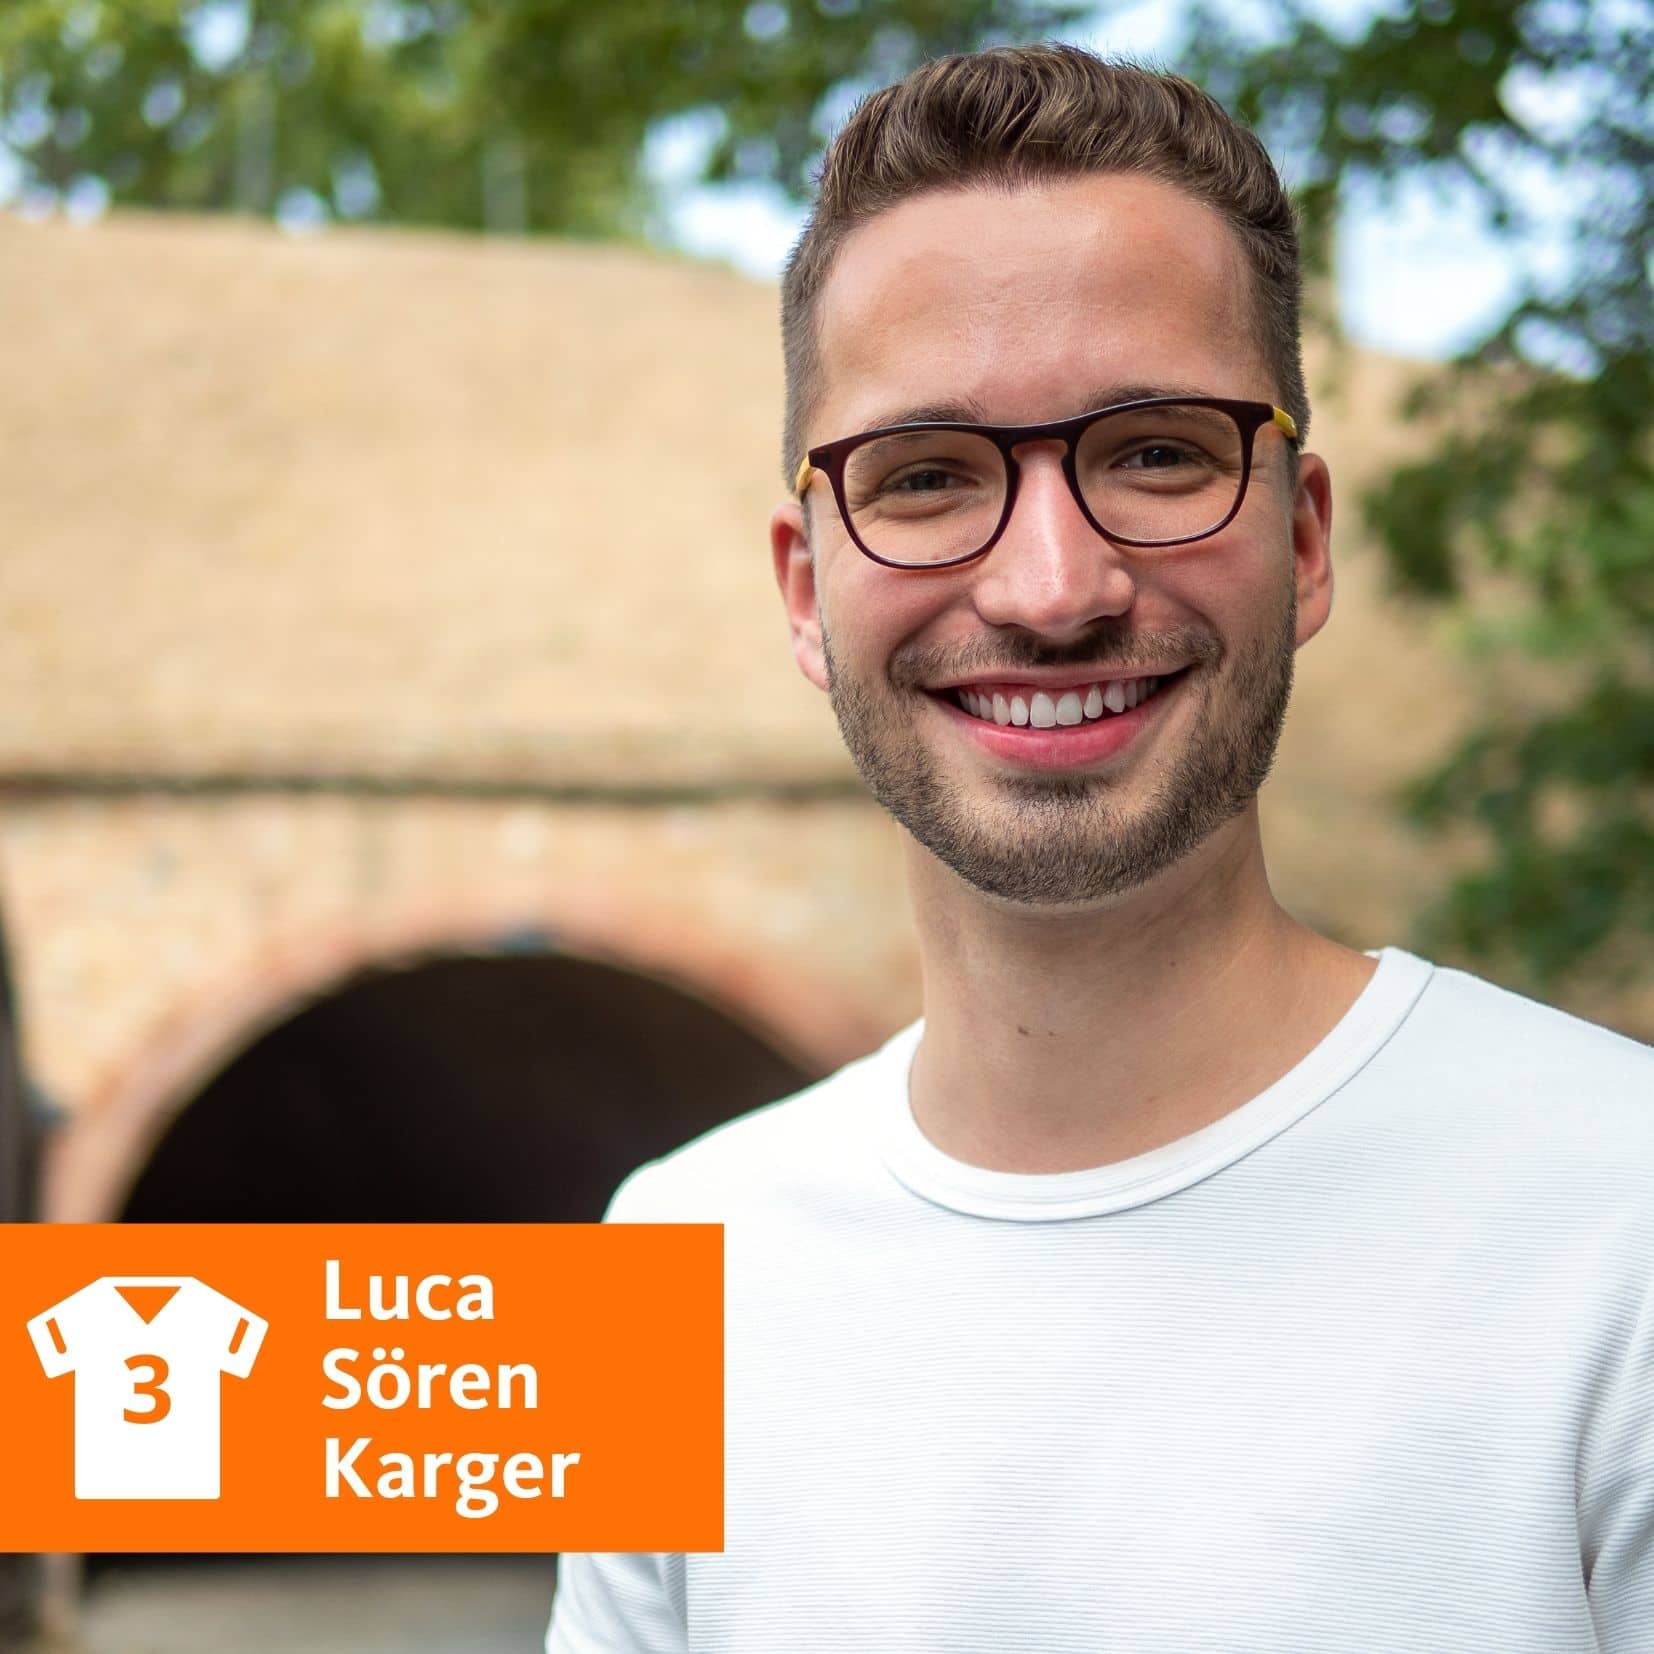 Luca Sören Karger